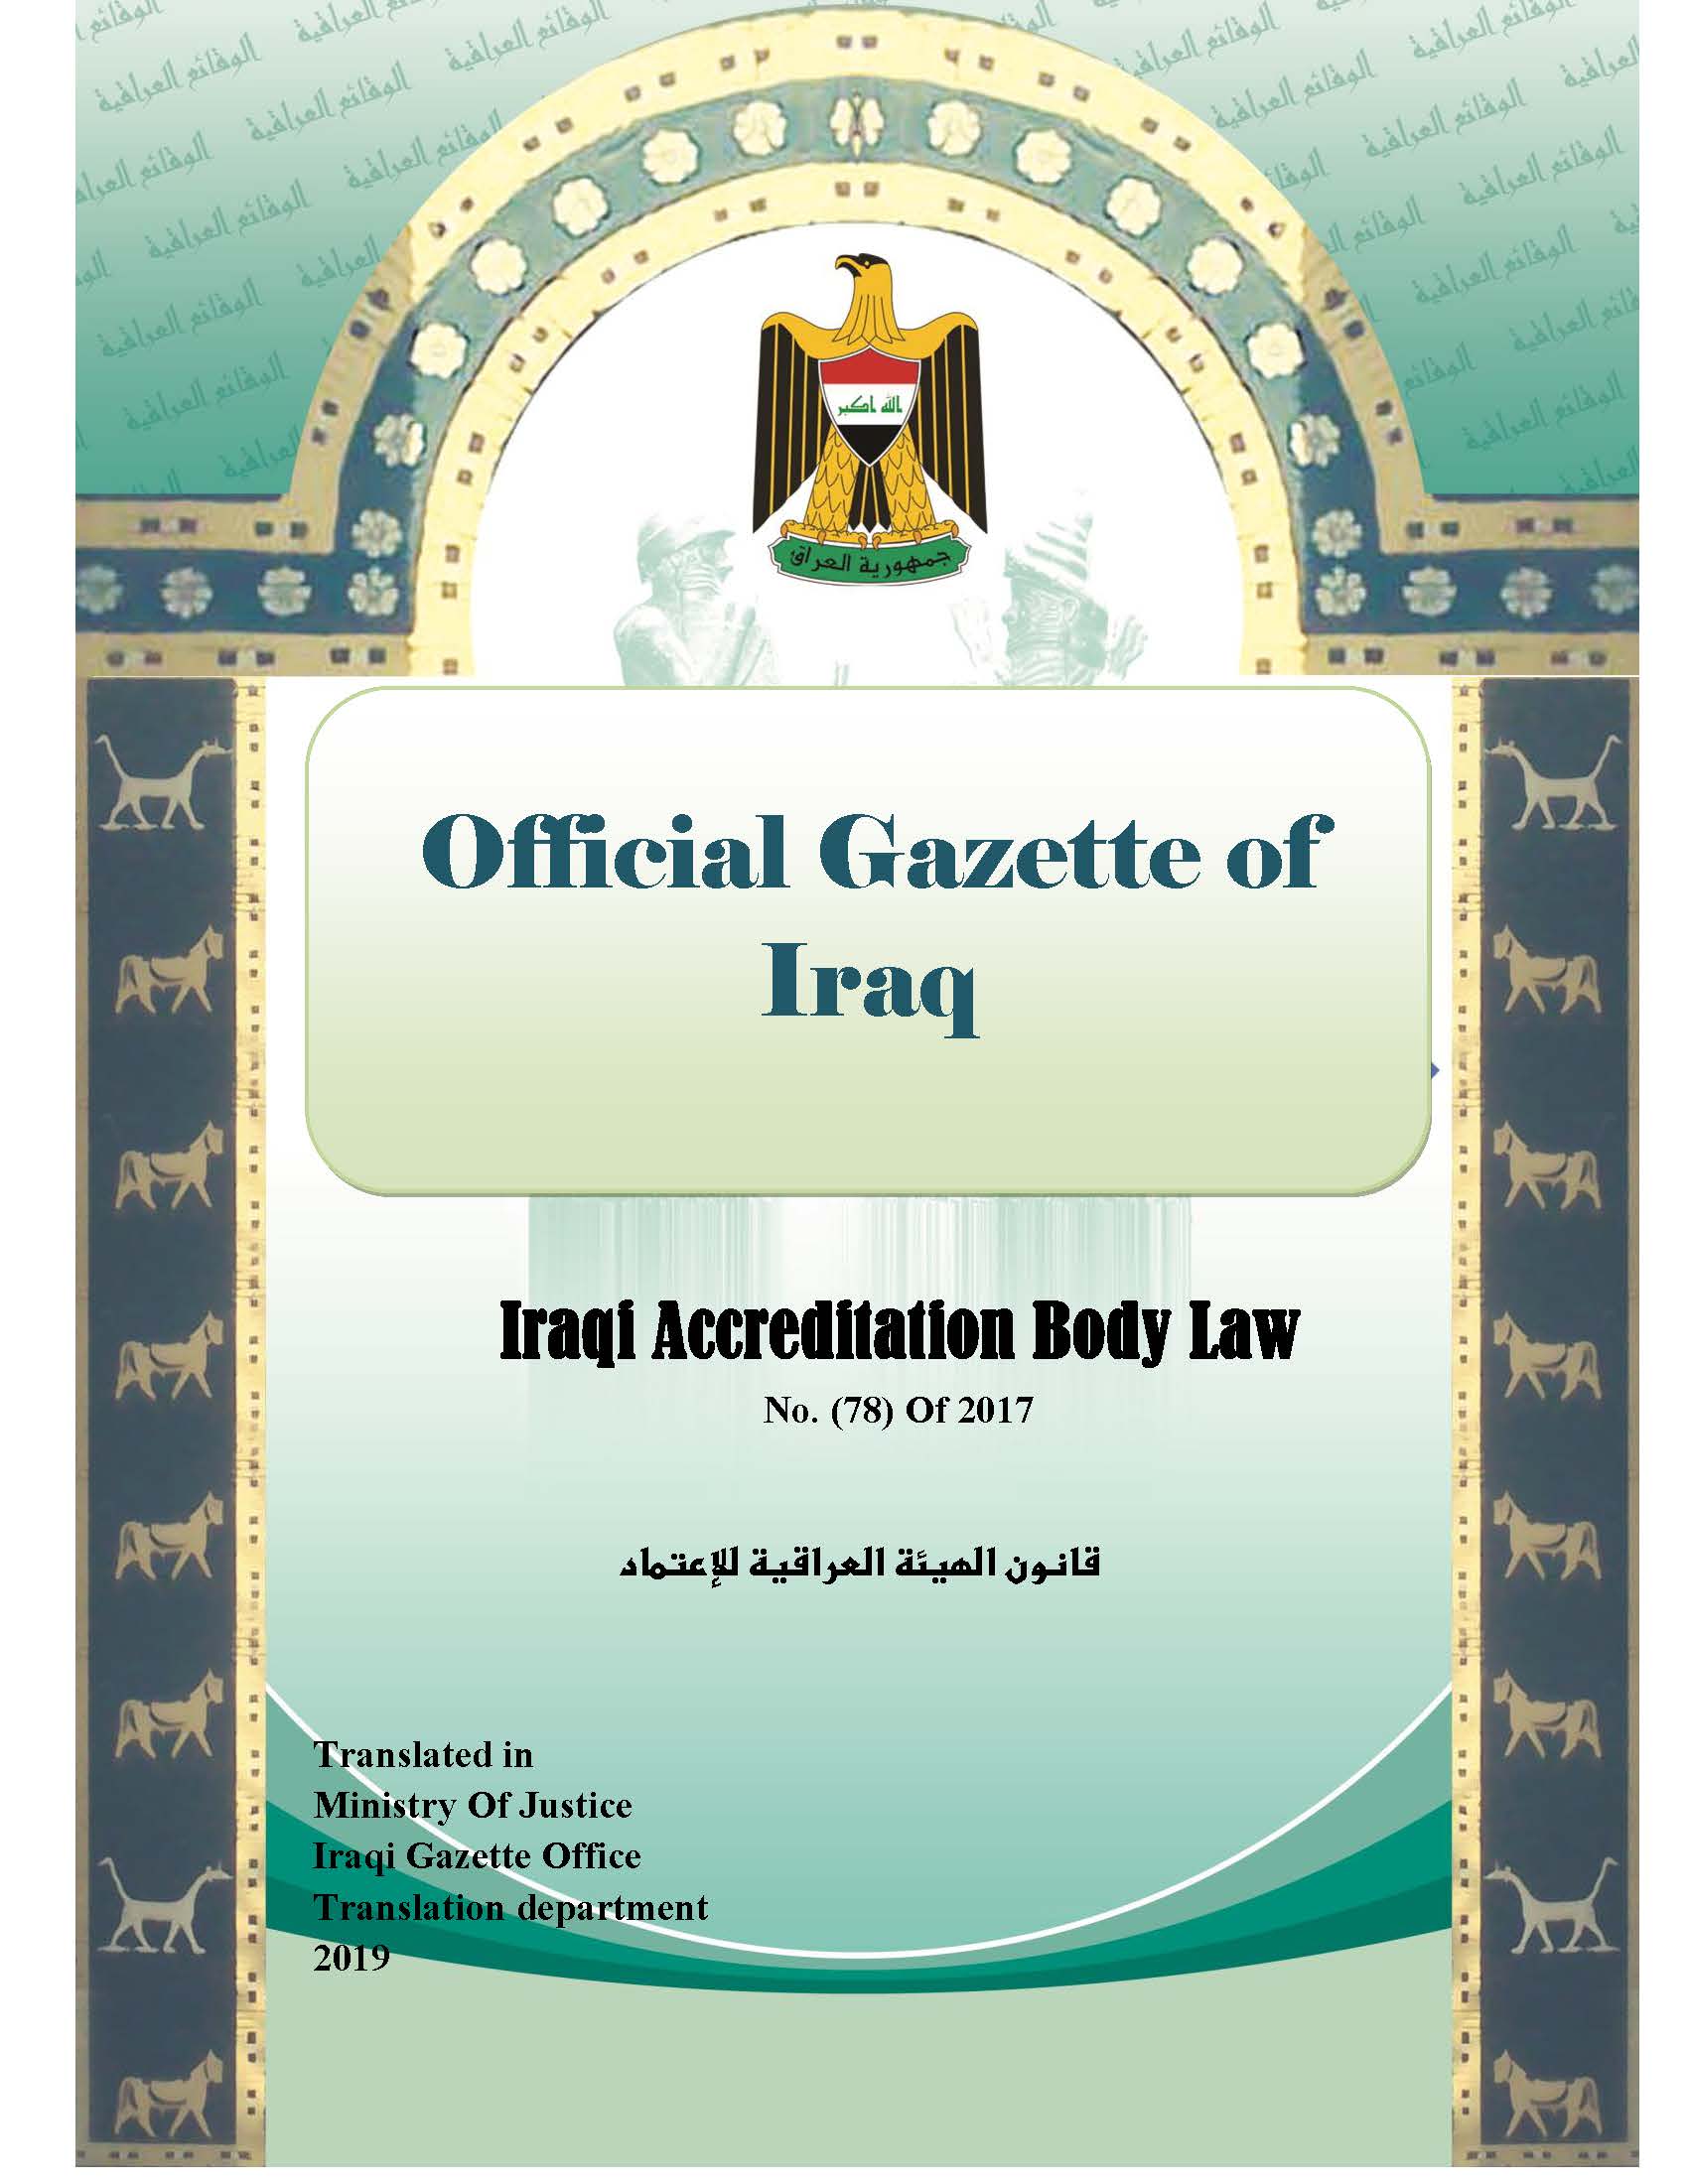 Iraqi Accredition Body Law 